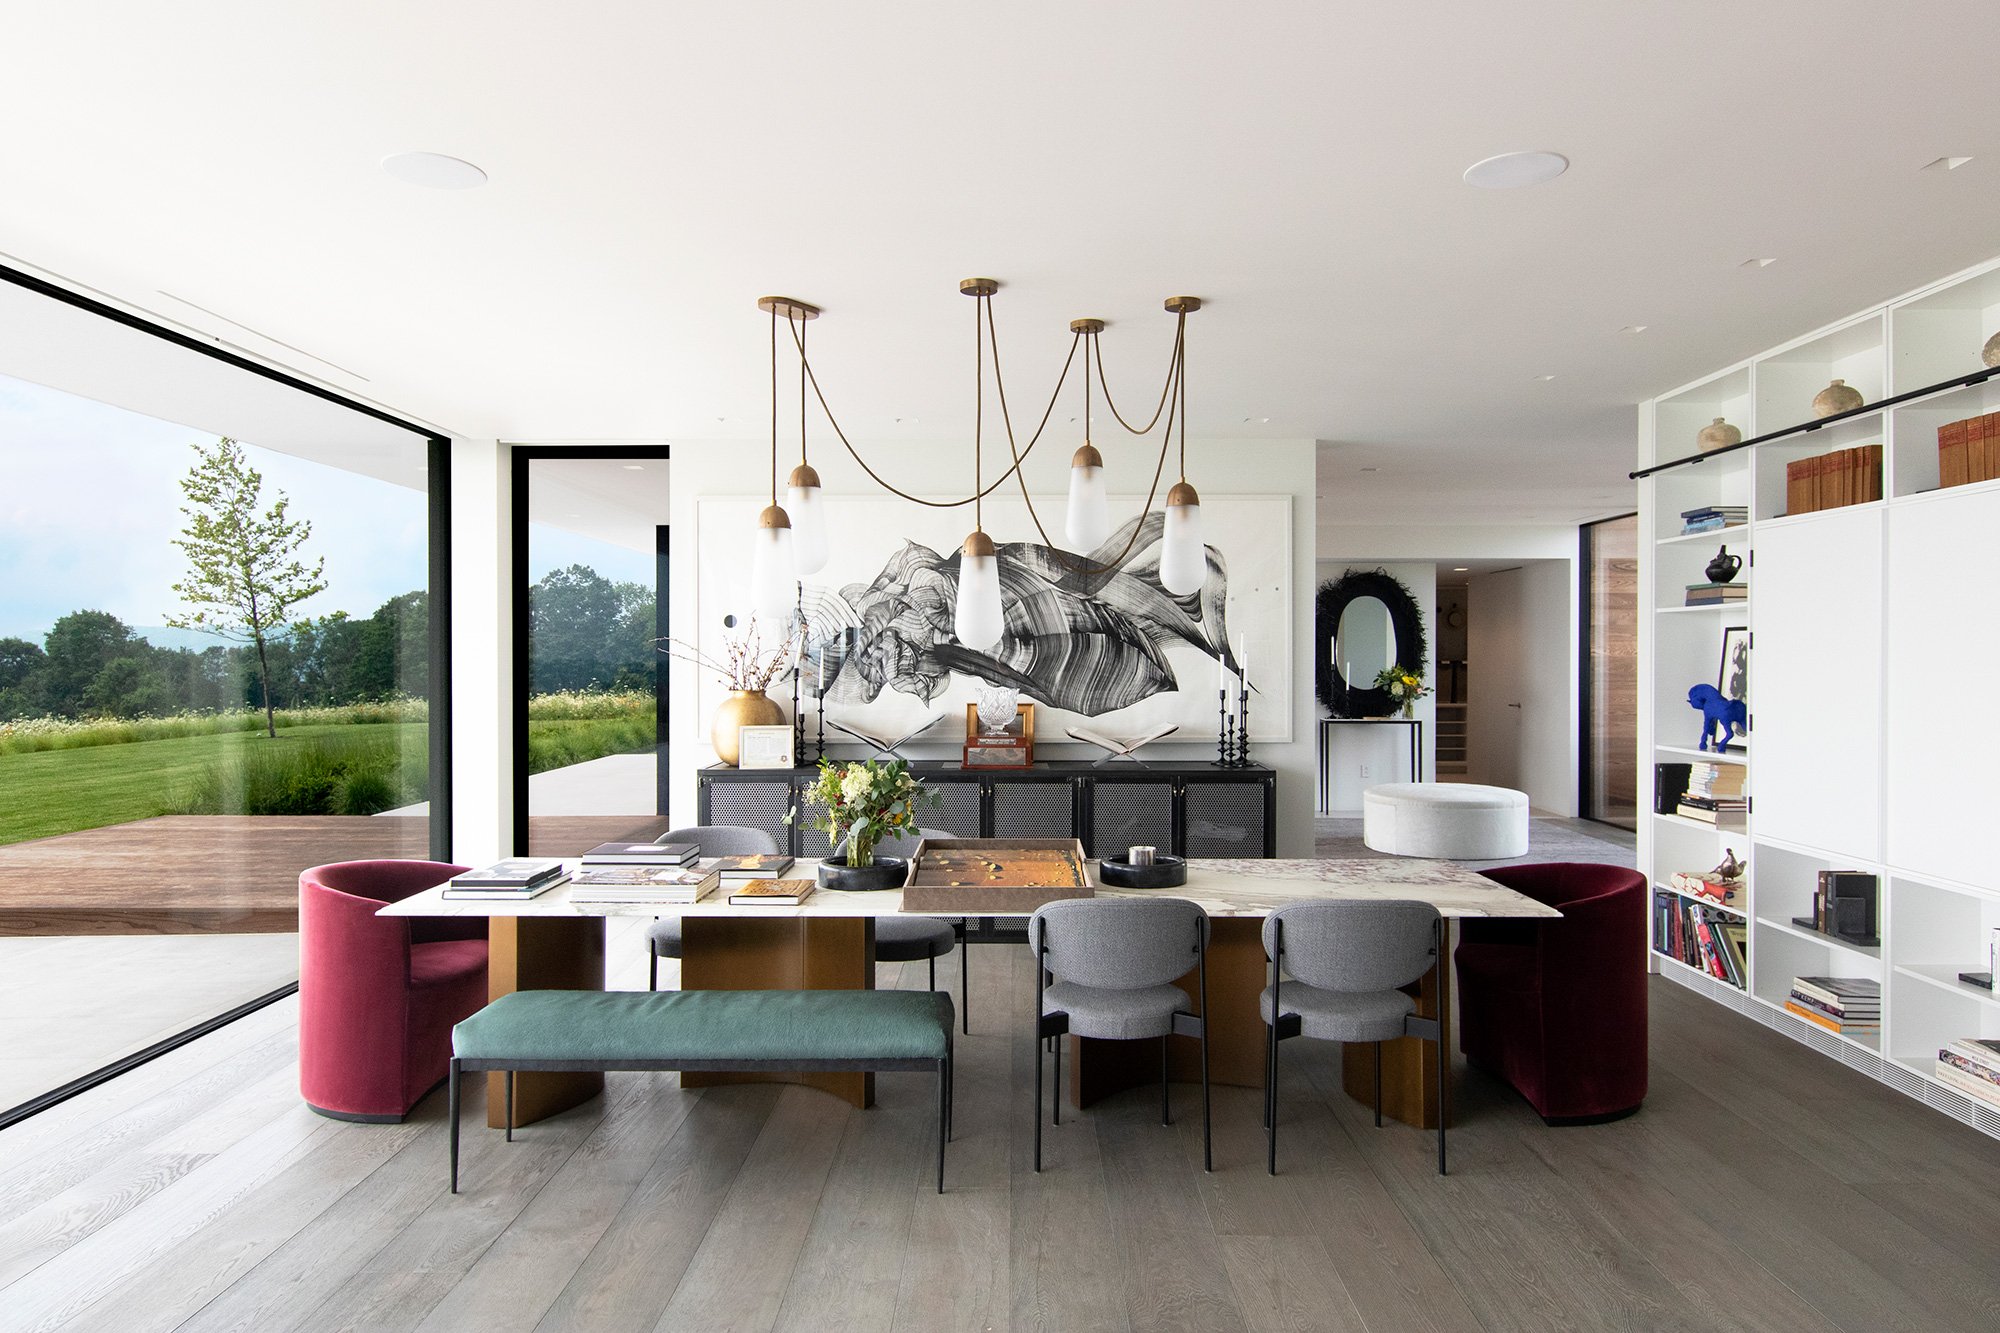 7_res4-resolution-4-architecture-millbrook-residence-modern-home-new-york-hudson-valley-custom-high-end-residential-dining-interior-design.jpg